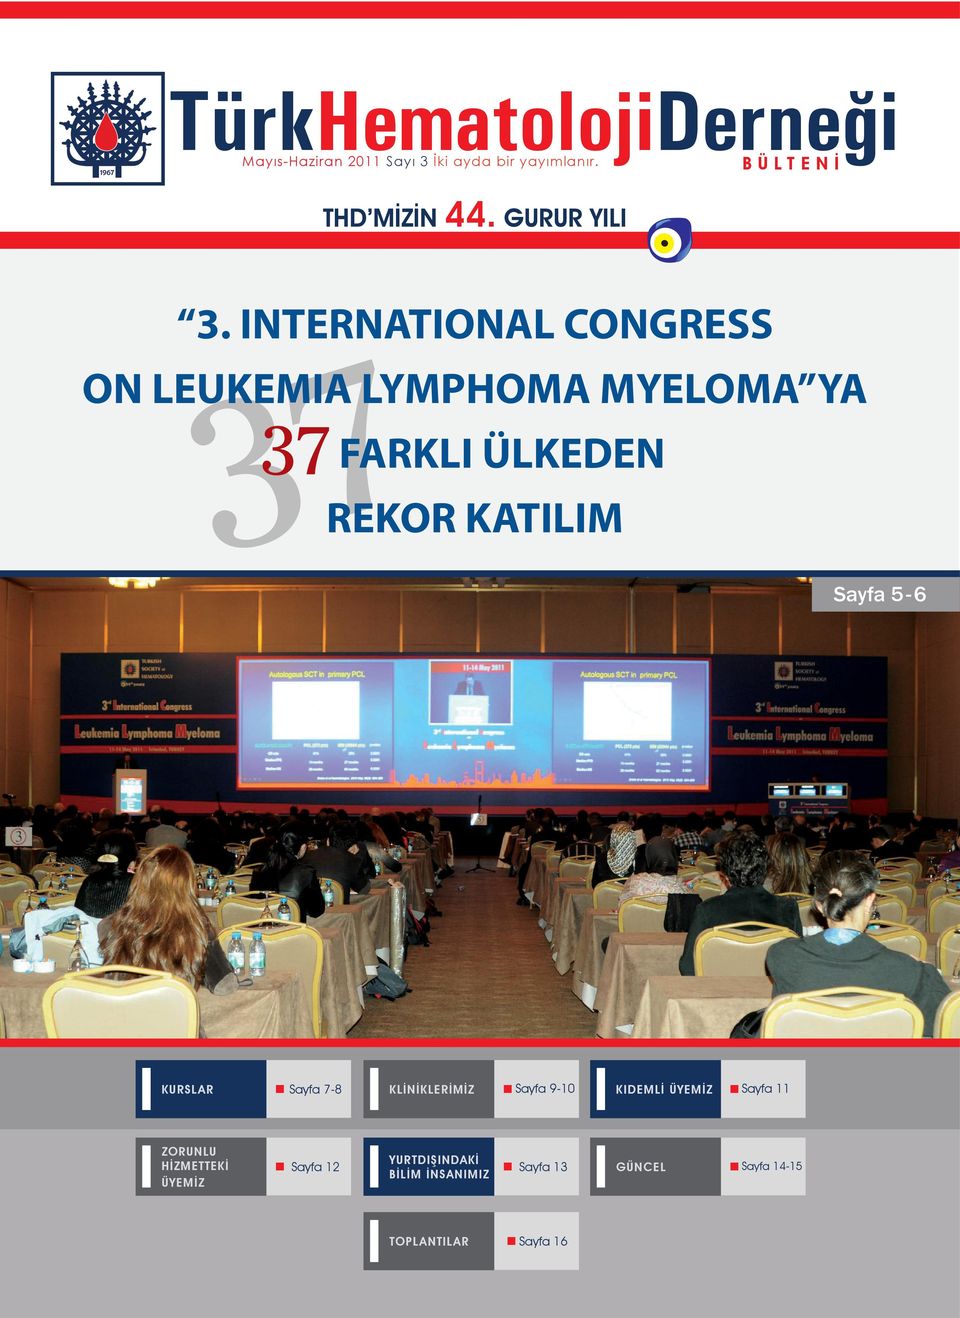 INTERNATIONAL CONGRESS ON LEUKEMIA LYMPHOMA MYELOMA YA 37 FARKLI ÜLKEDEN REKOR KATILIM Sayfa 5-6